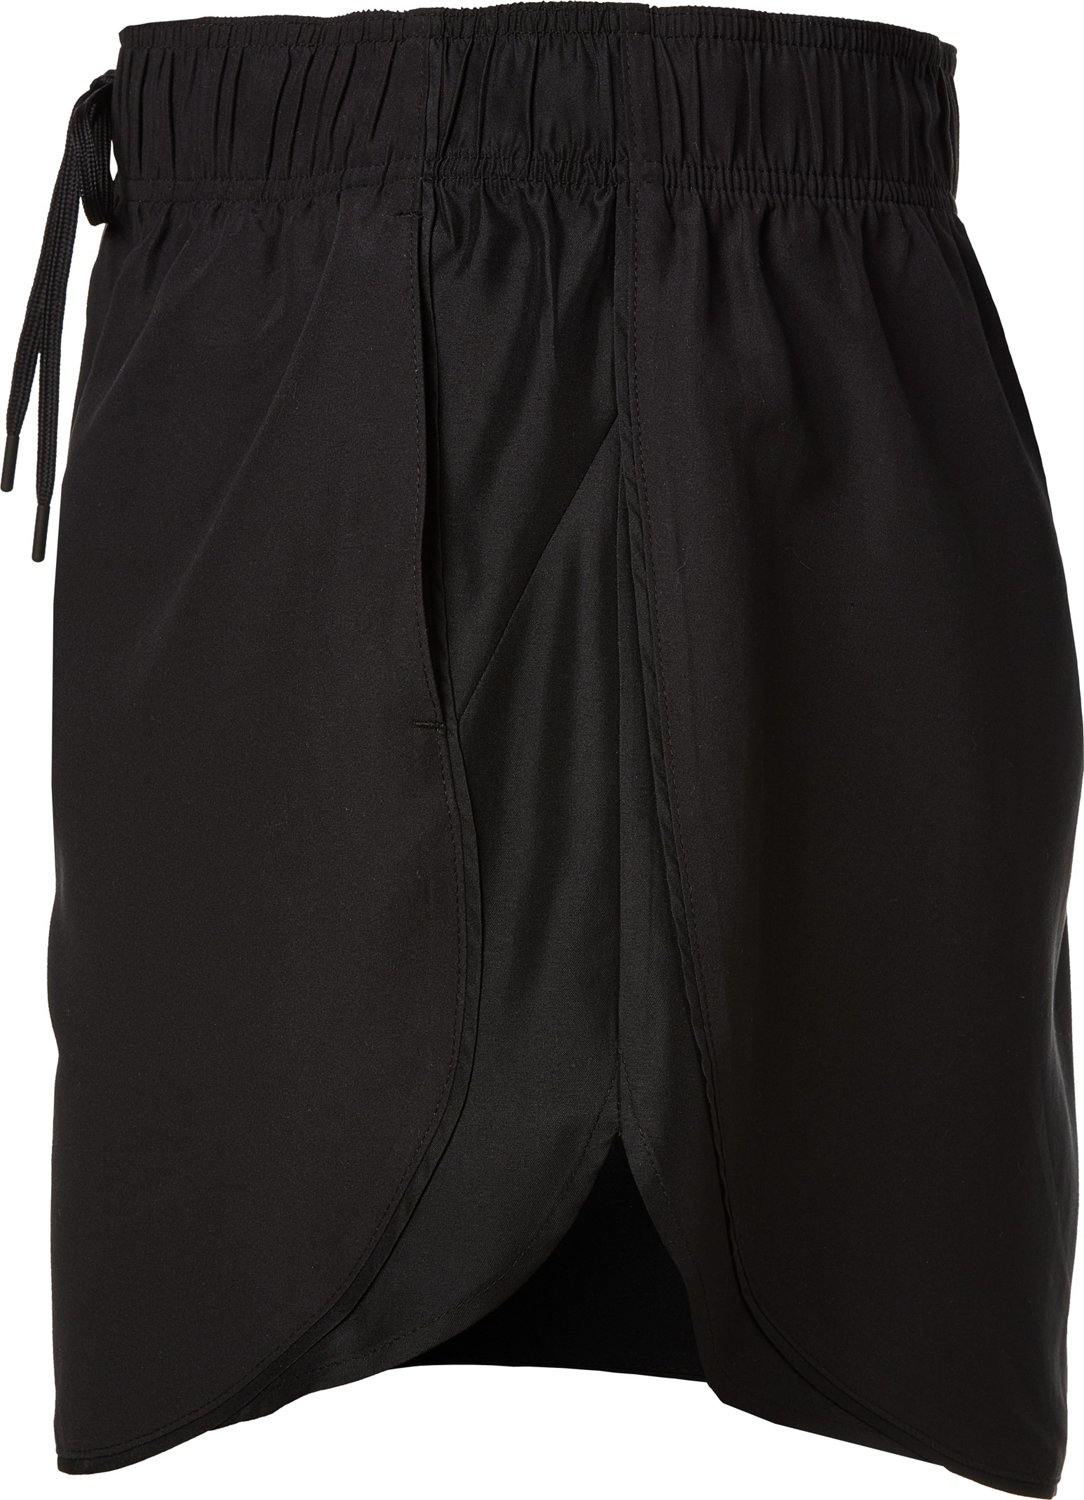 BCG Women's Woven Donna Plus Size Shorts | Academy